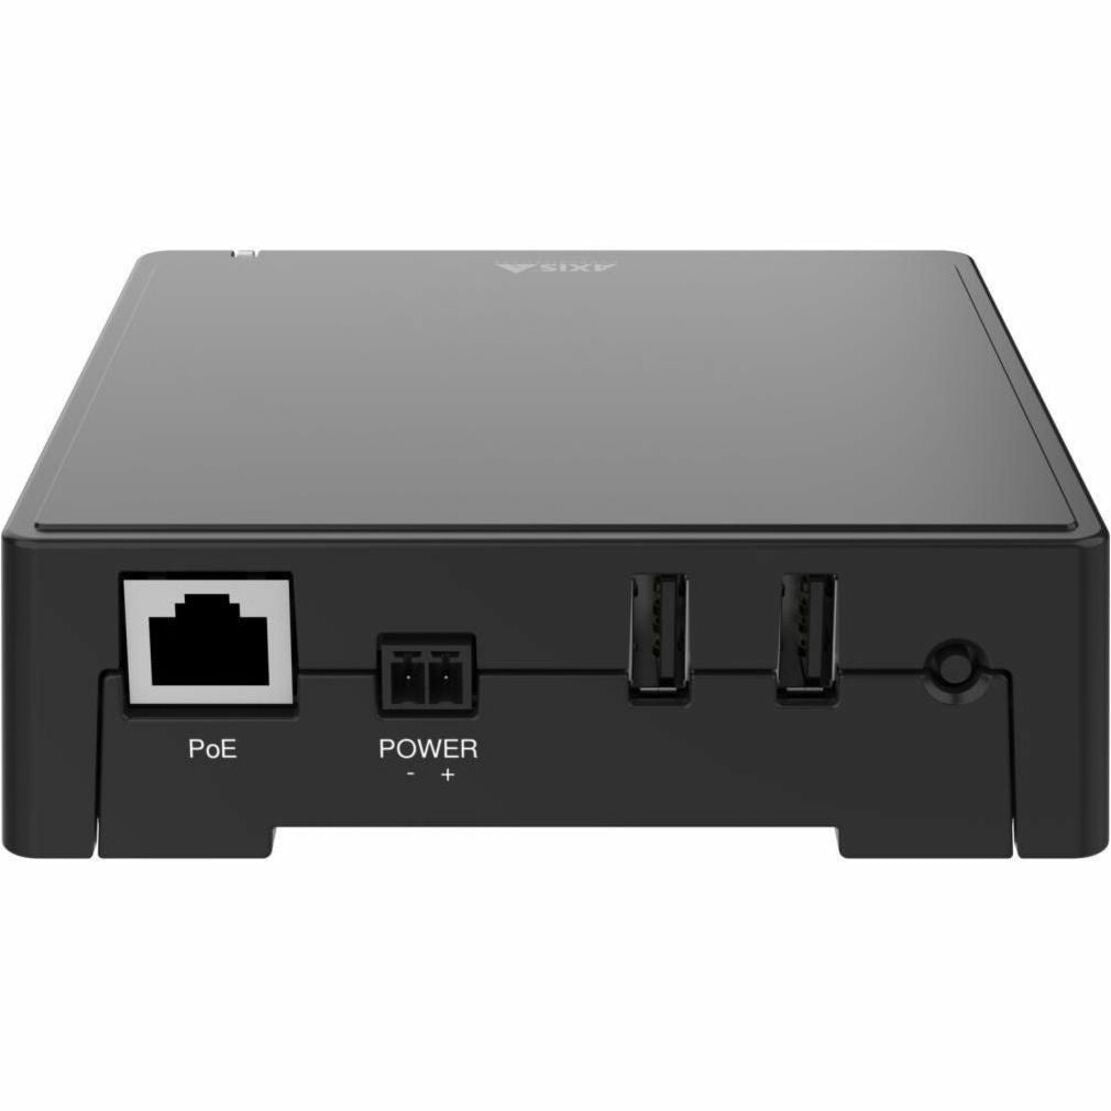 AXIS 02282-001 D1110 محول فيديو 4K ، وحدة معالجة / التقاط الفيديو مع واجهات USB ، HDMI ، الصوت الخارجي ، والشبكة (RJ-45) العلامة التجارية: AXIS